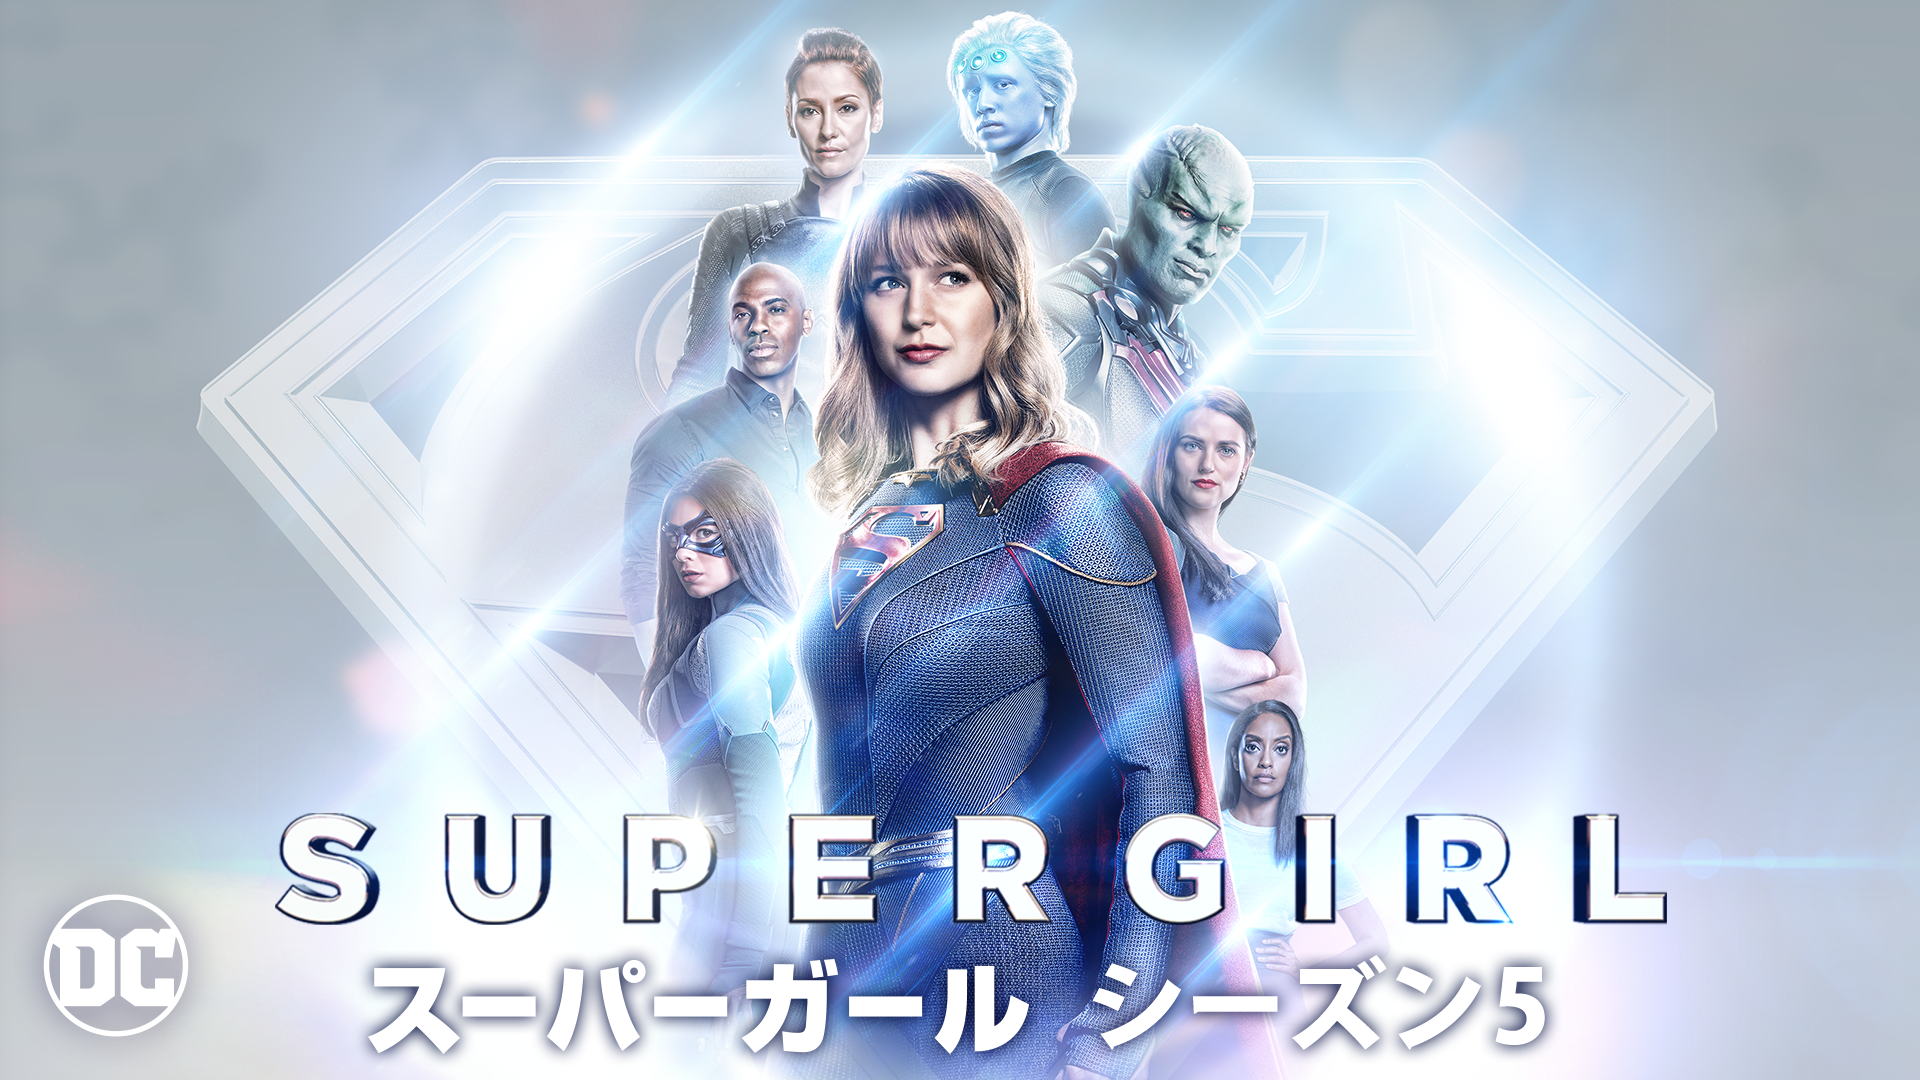 SUPERGIRL/スーパーガール シーズン5(海外ドラマ / 2019) - 動画配信 